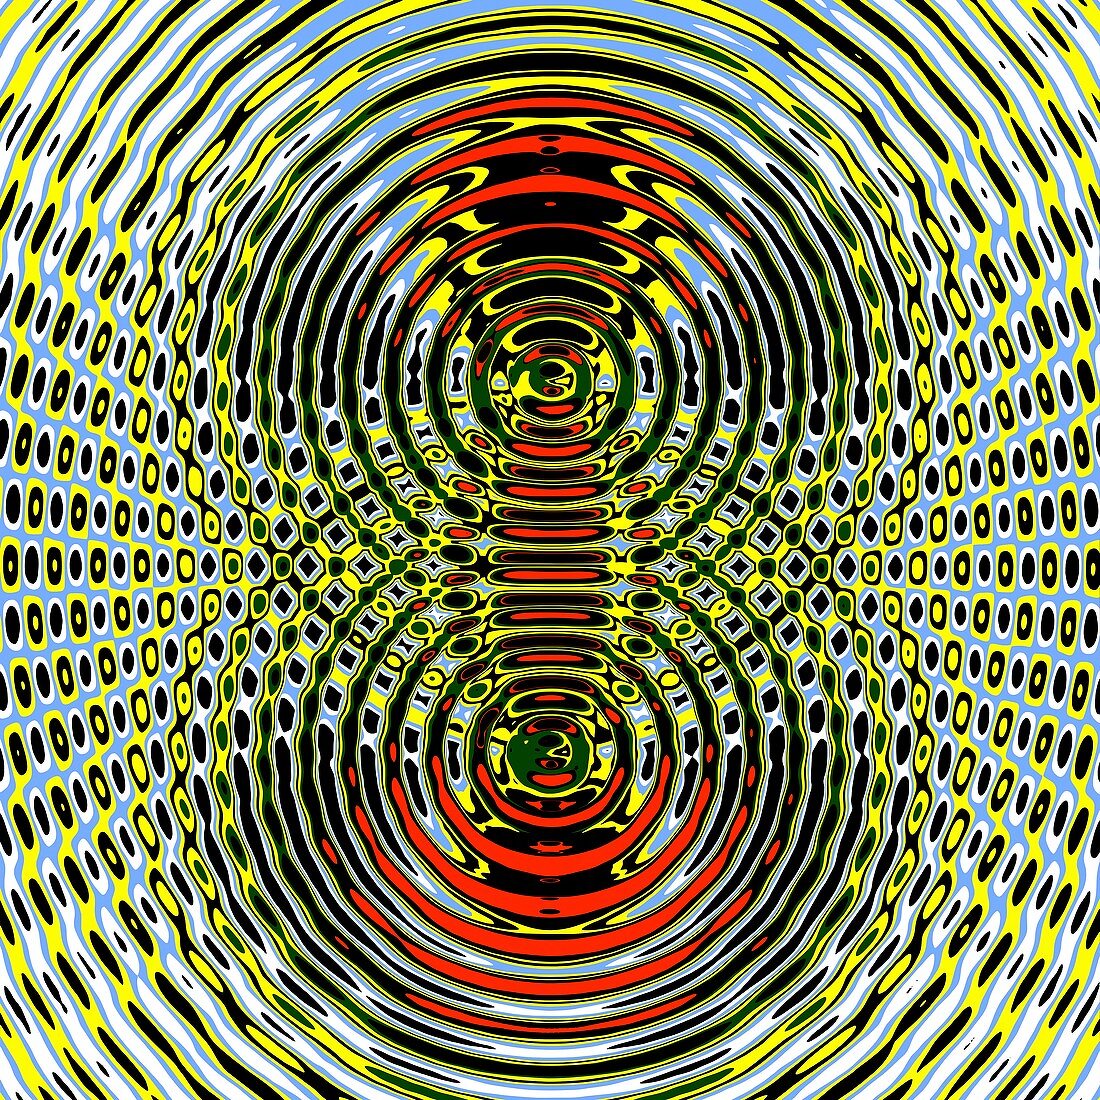 Circular wave interference,illustration